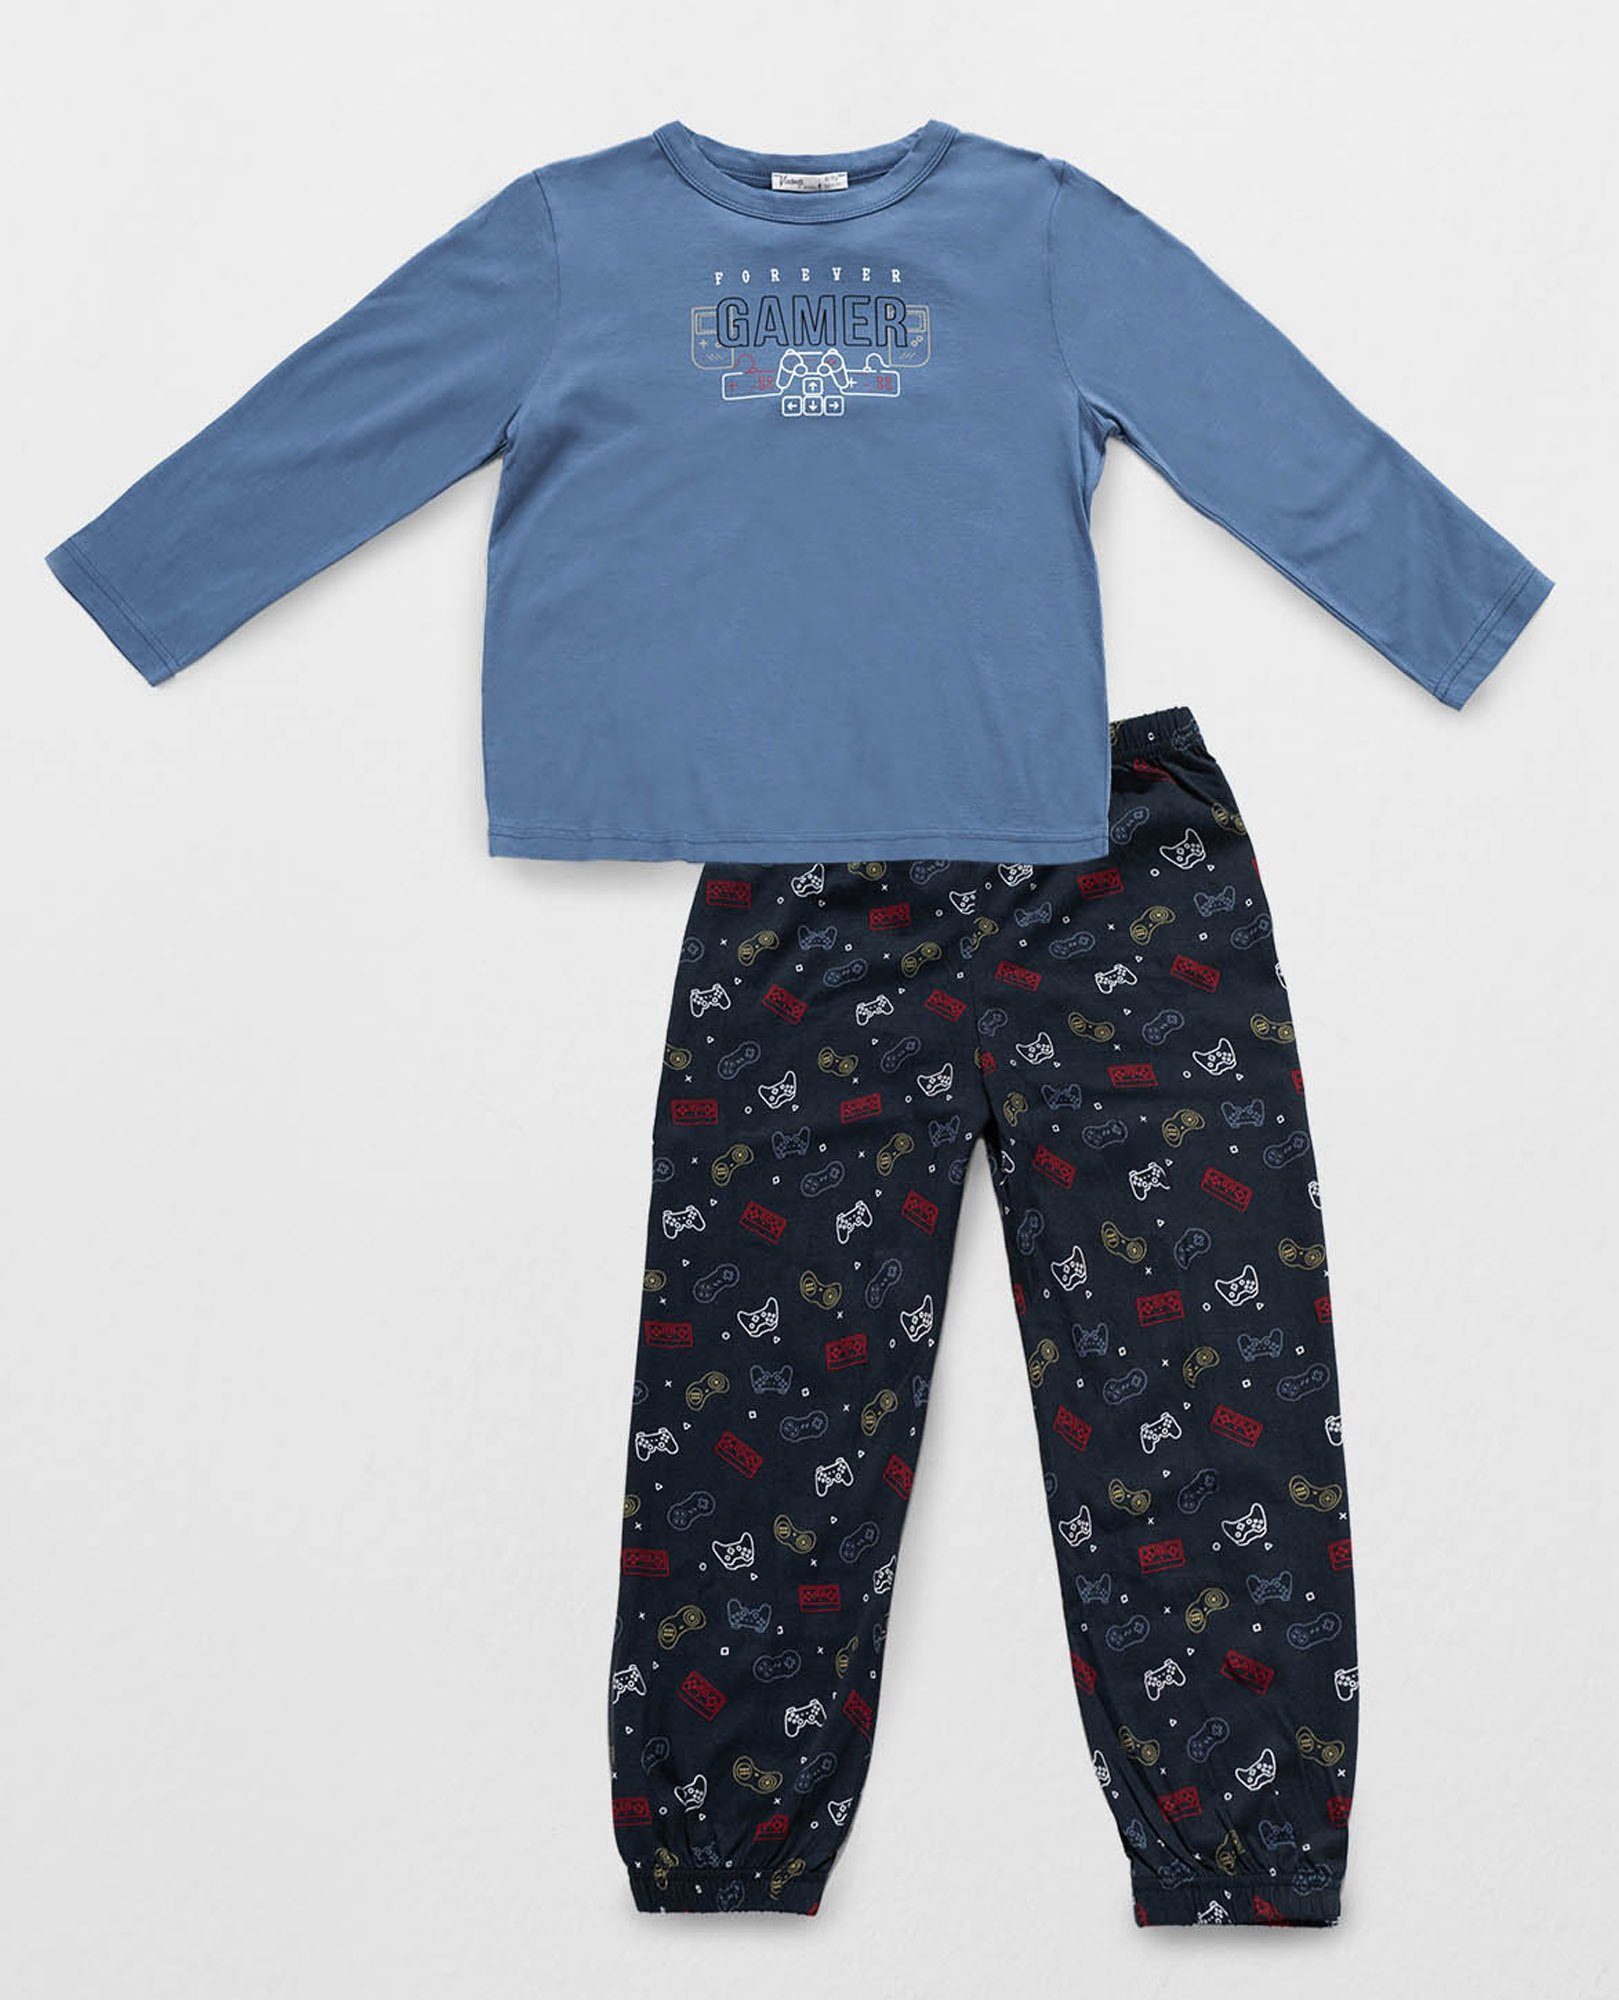 Vamp Schlafanzug VAMP kids (Set, 2 tlg., 2-teilig) Jungen Schlafanzug lang 2-teilig Pyjama Baumwolle Gamer